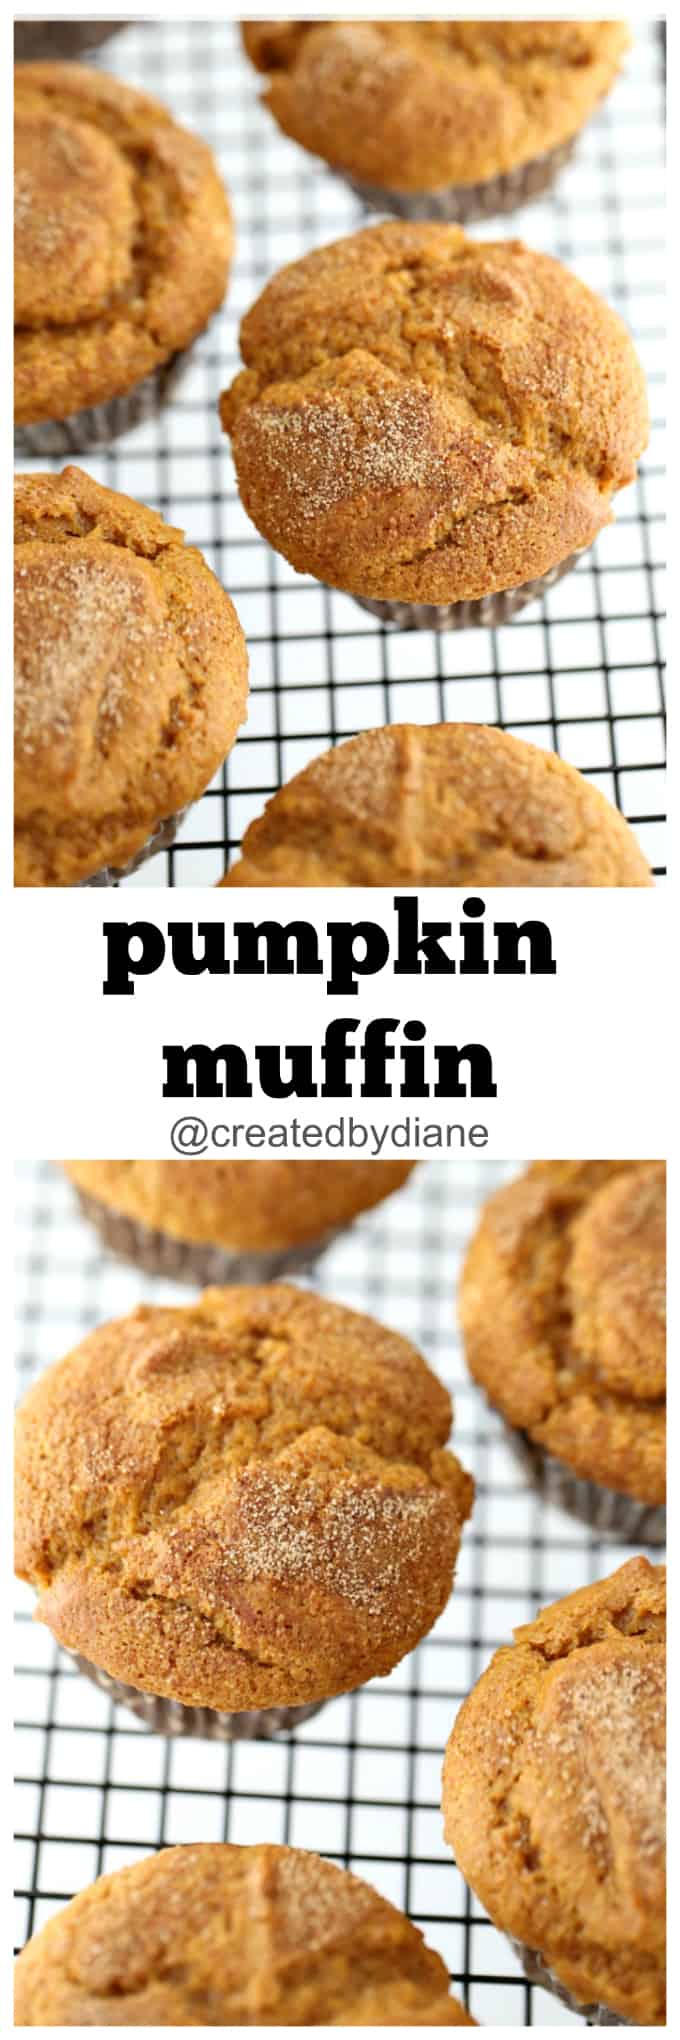 pumpkin muffin recipe from @createdbydiane with a cinnamon sugar topping